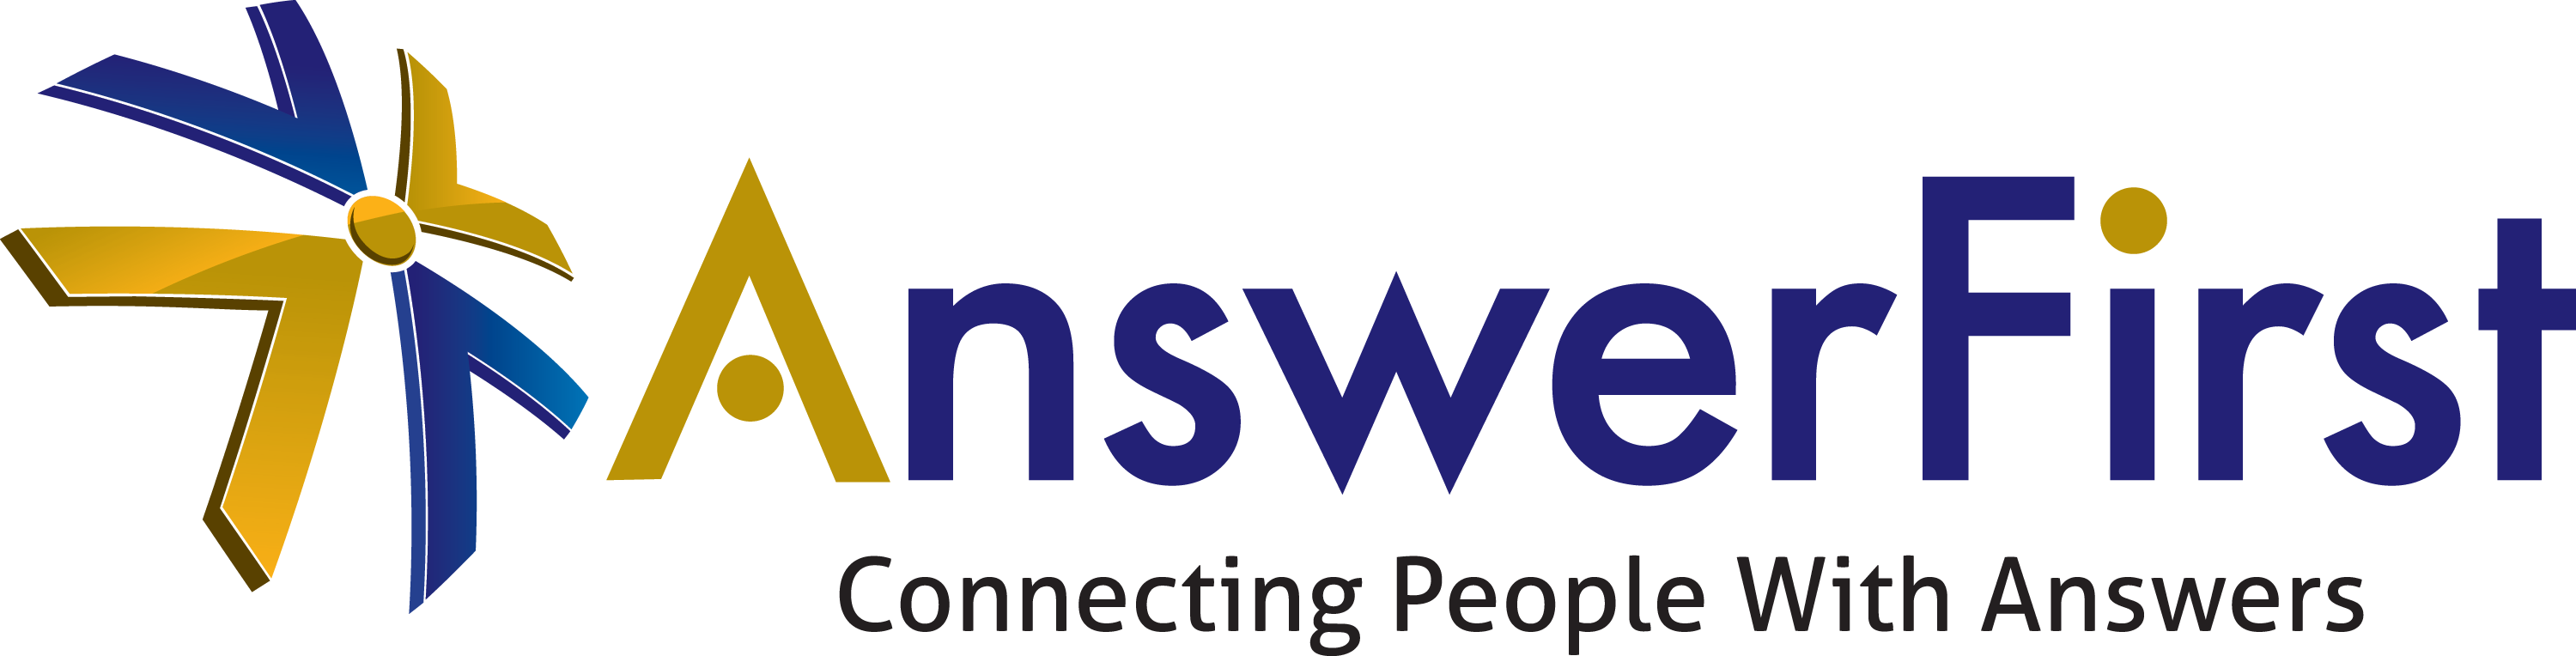 AnswerFirst Communications, Inc. Company Logo